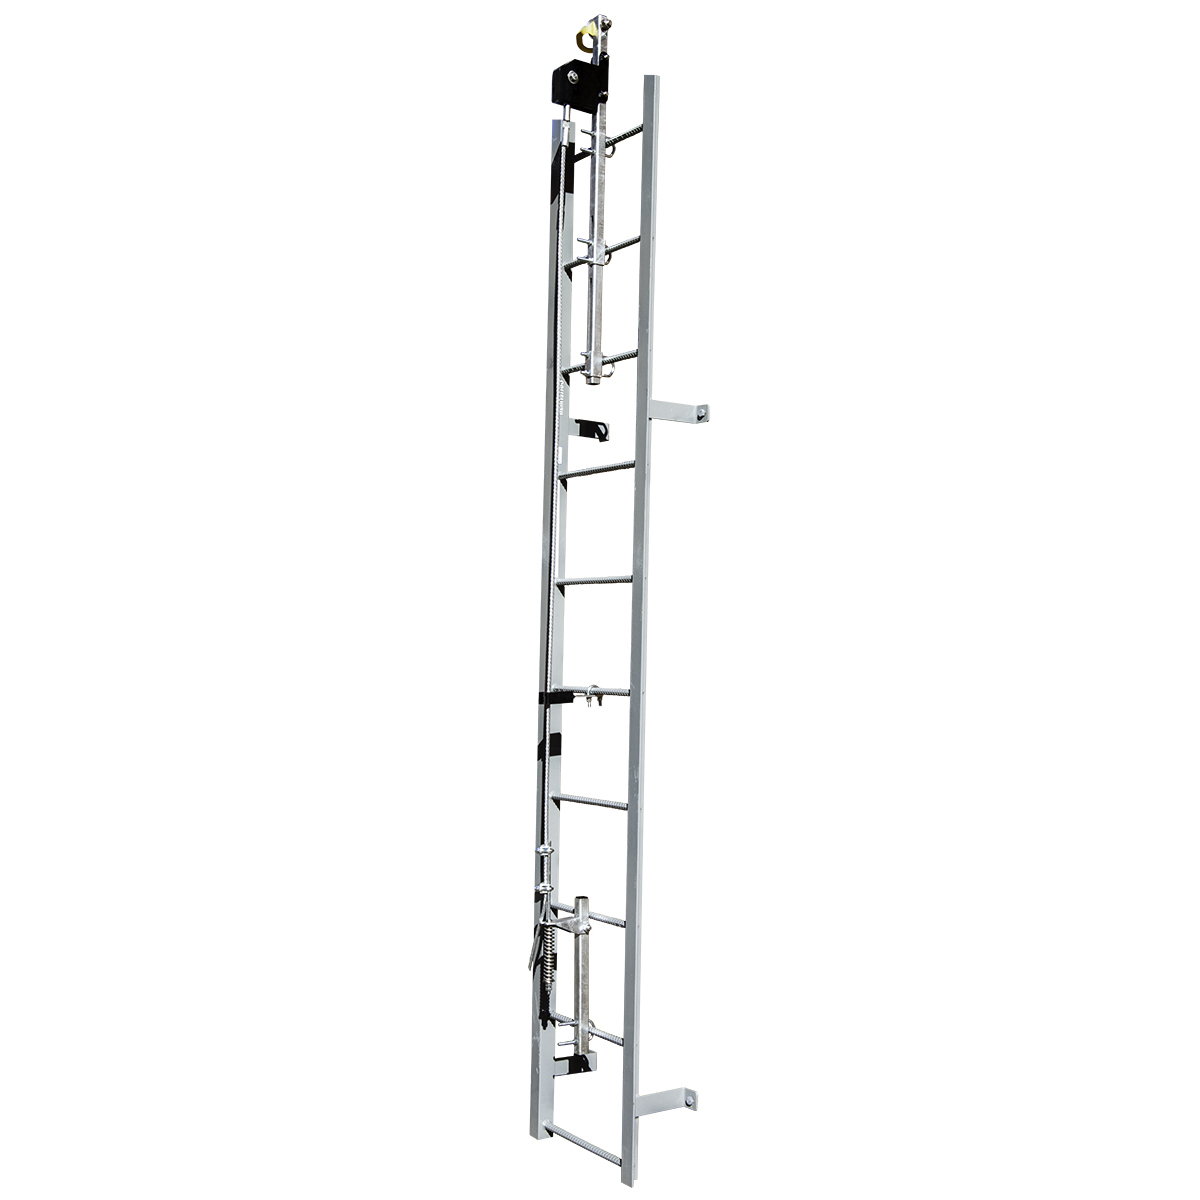 SafeWaze 30' VLL Cable Ladder System, 4-person Complete Kit